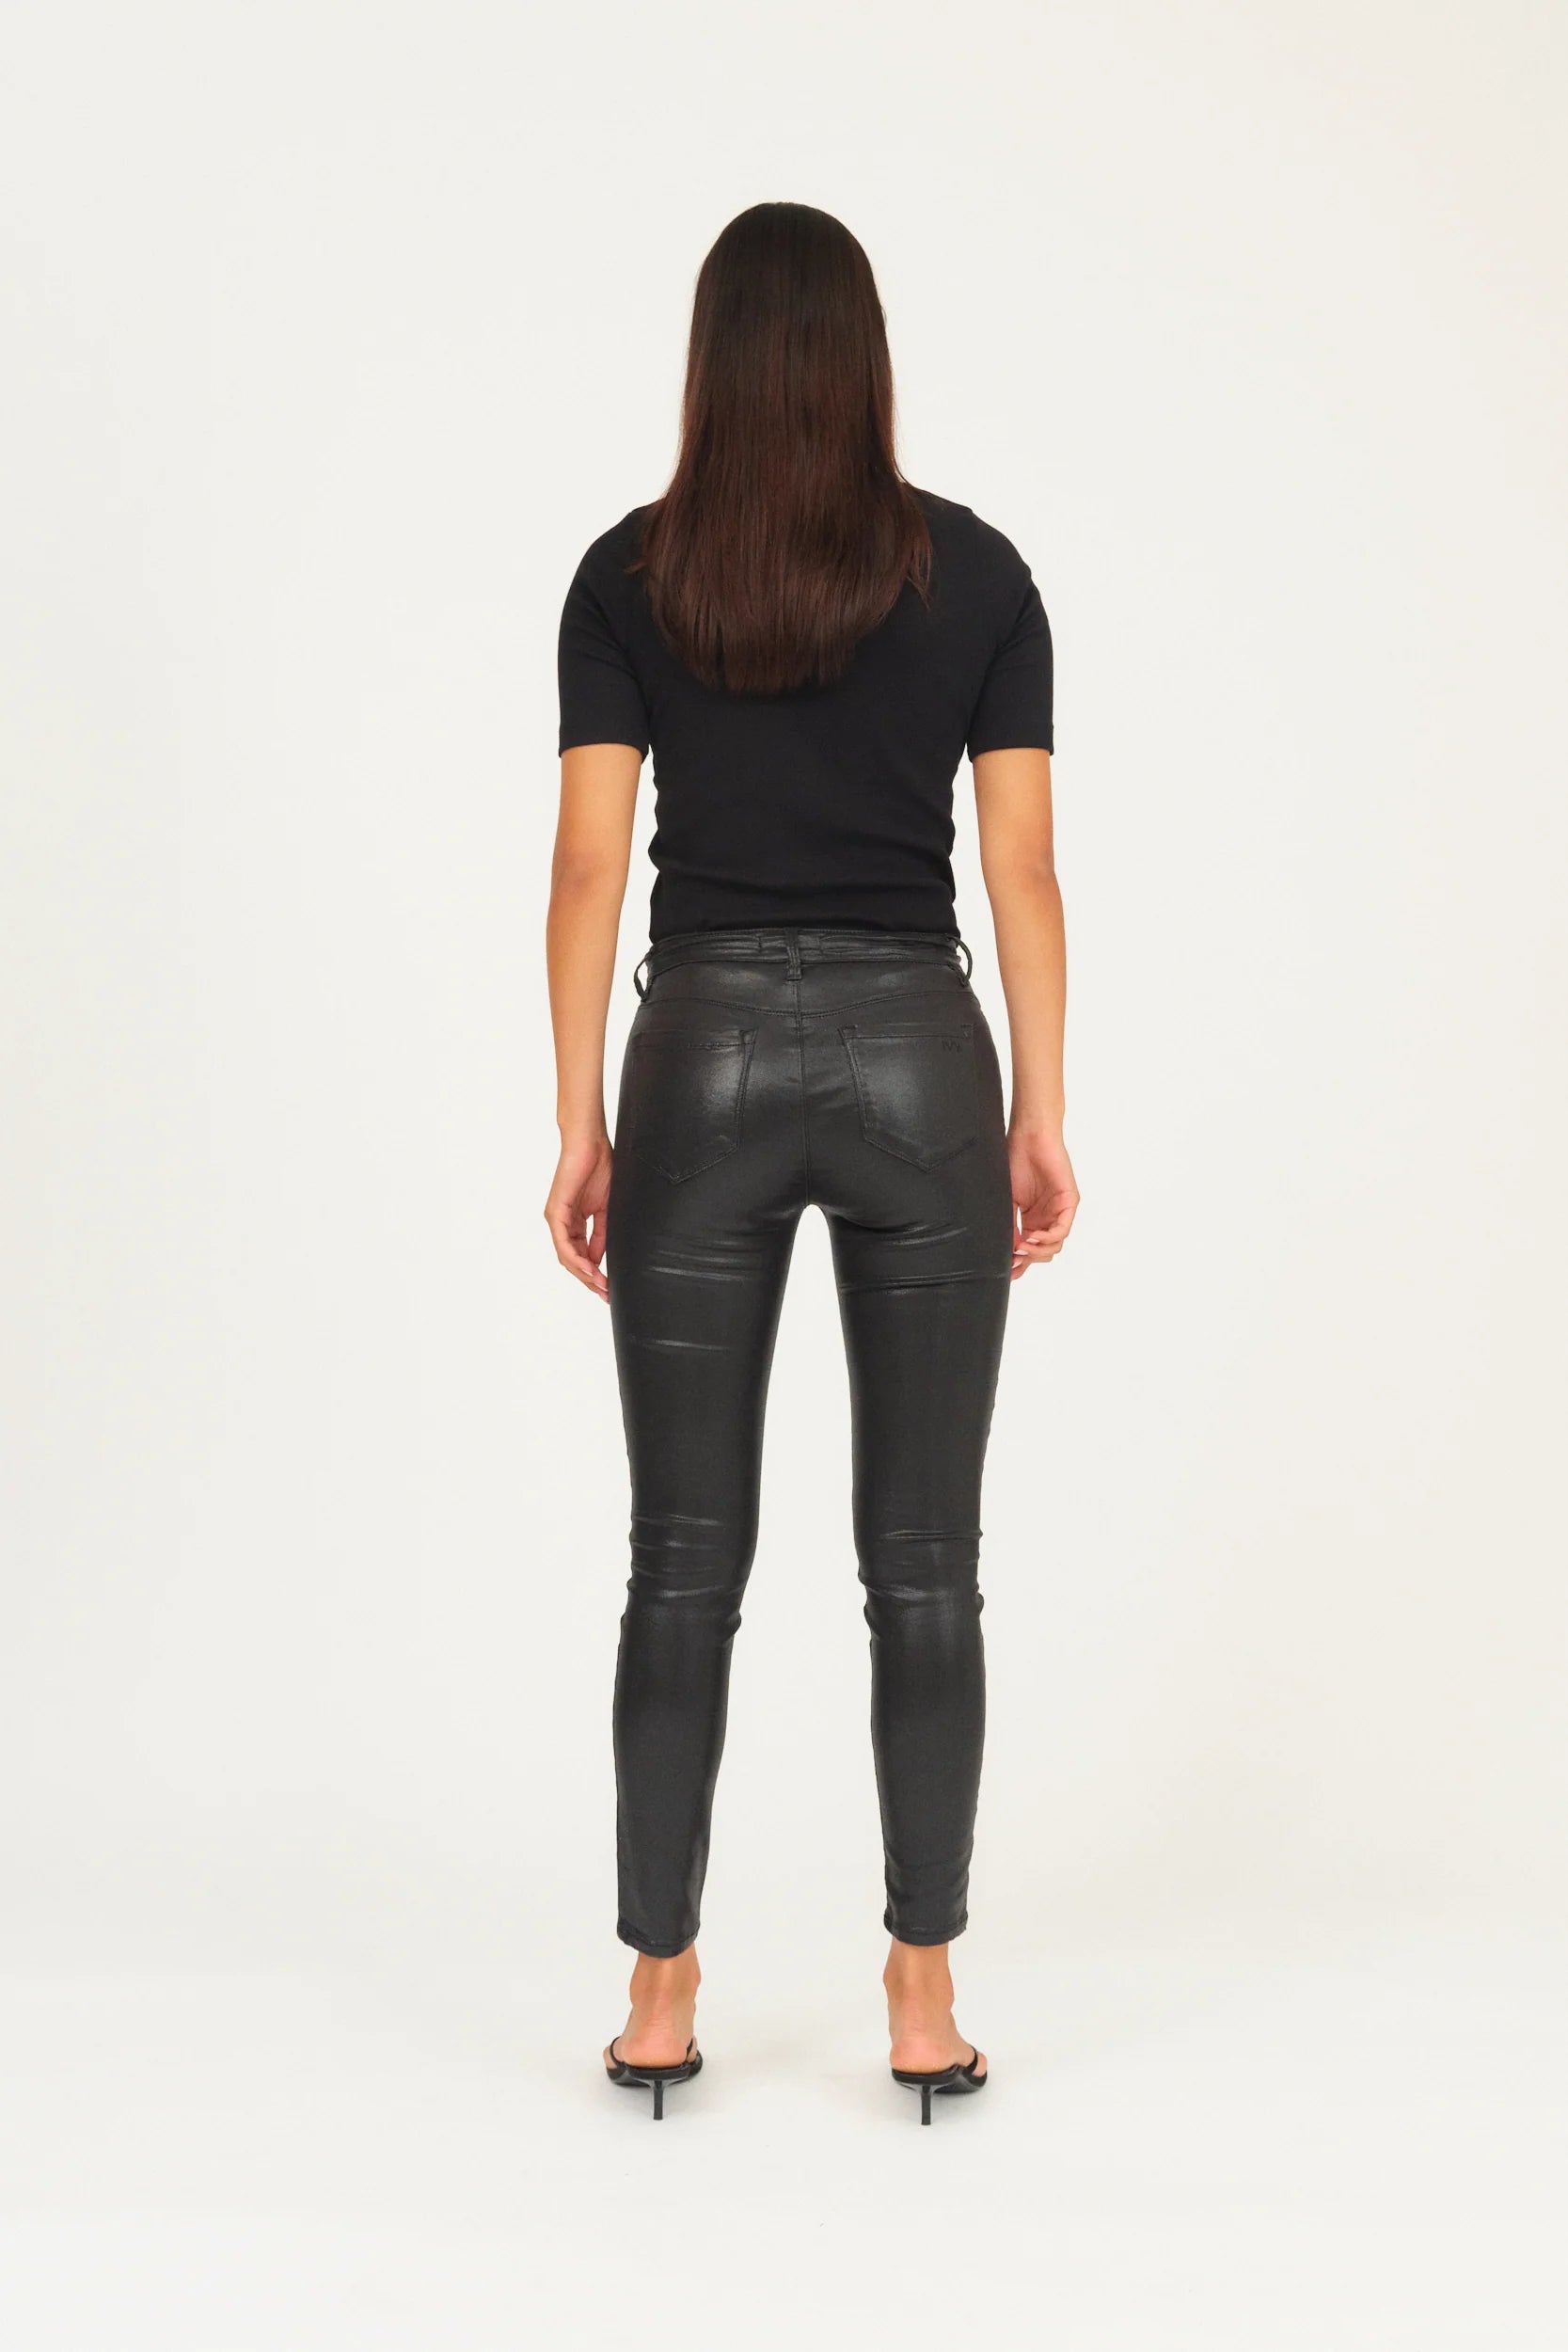 IVY-Alexa Jeans Exclusive Wild Glam - Black